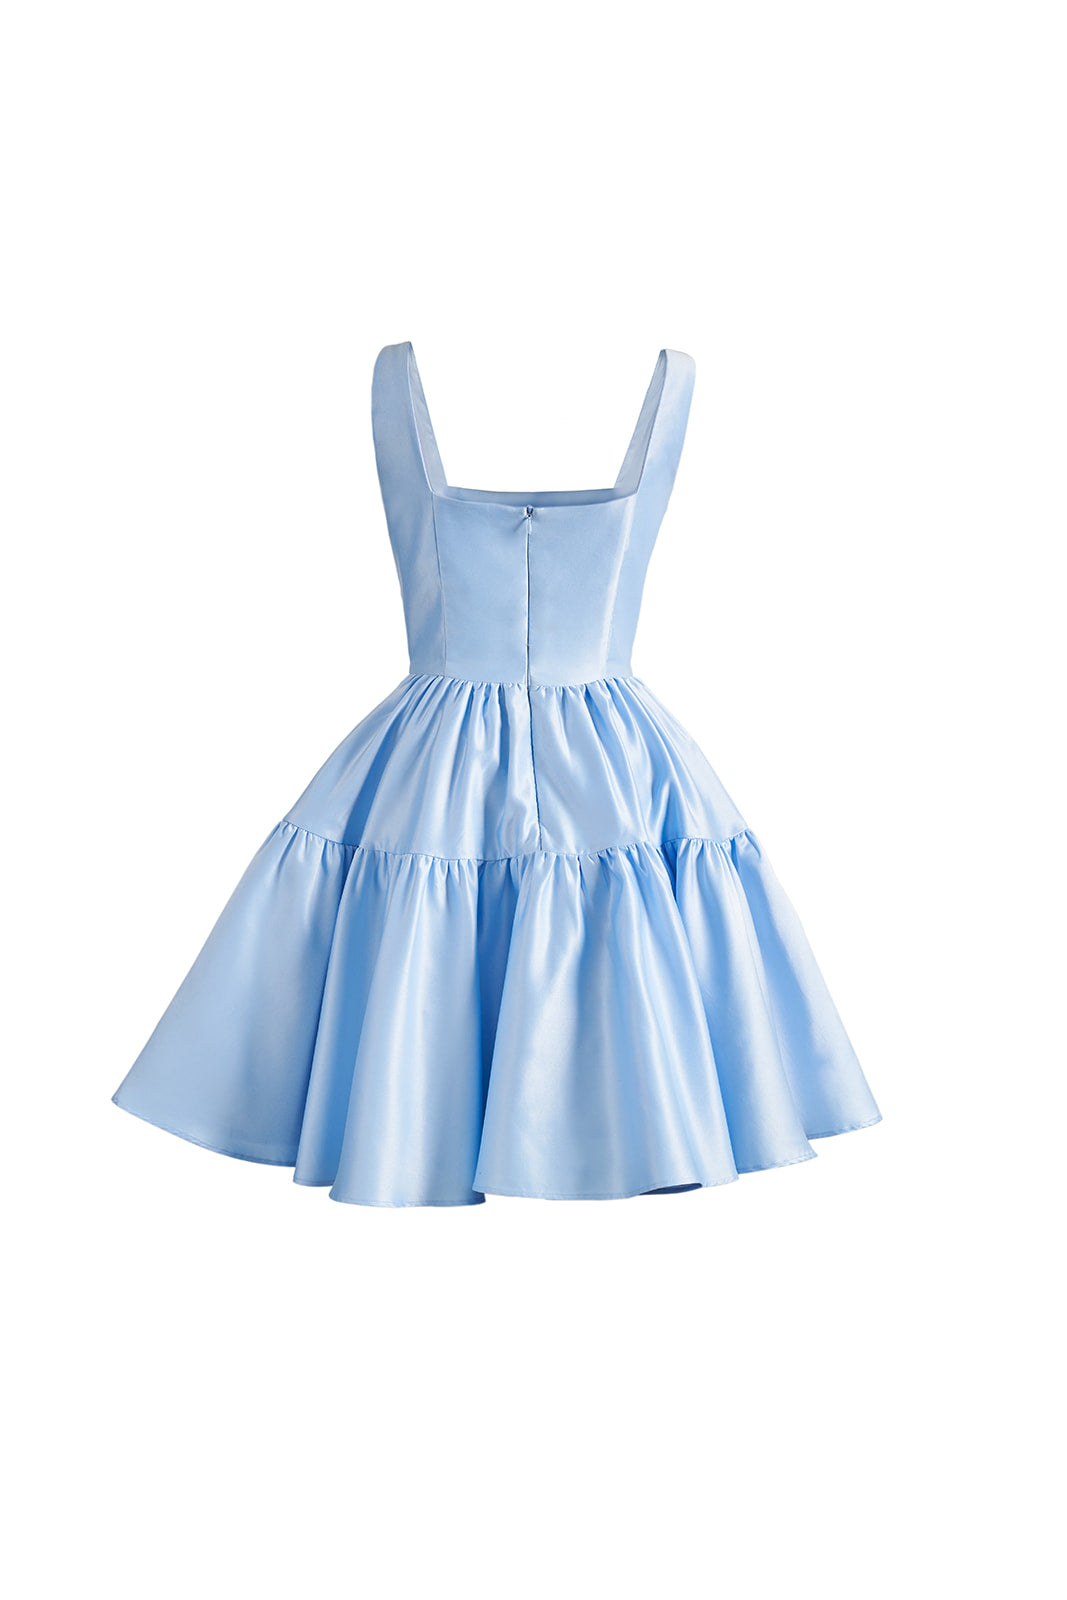 FINAL SALE The Dream Dress in Ingenue Blue- IN STOCK NOW – Chelsea